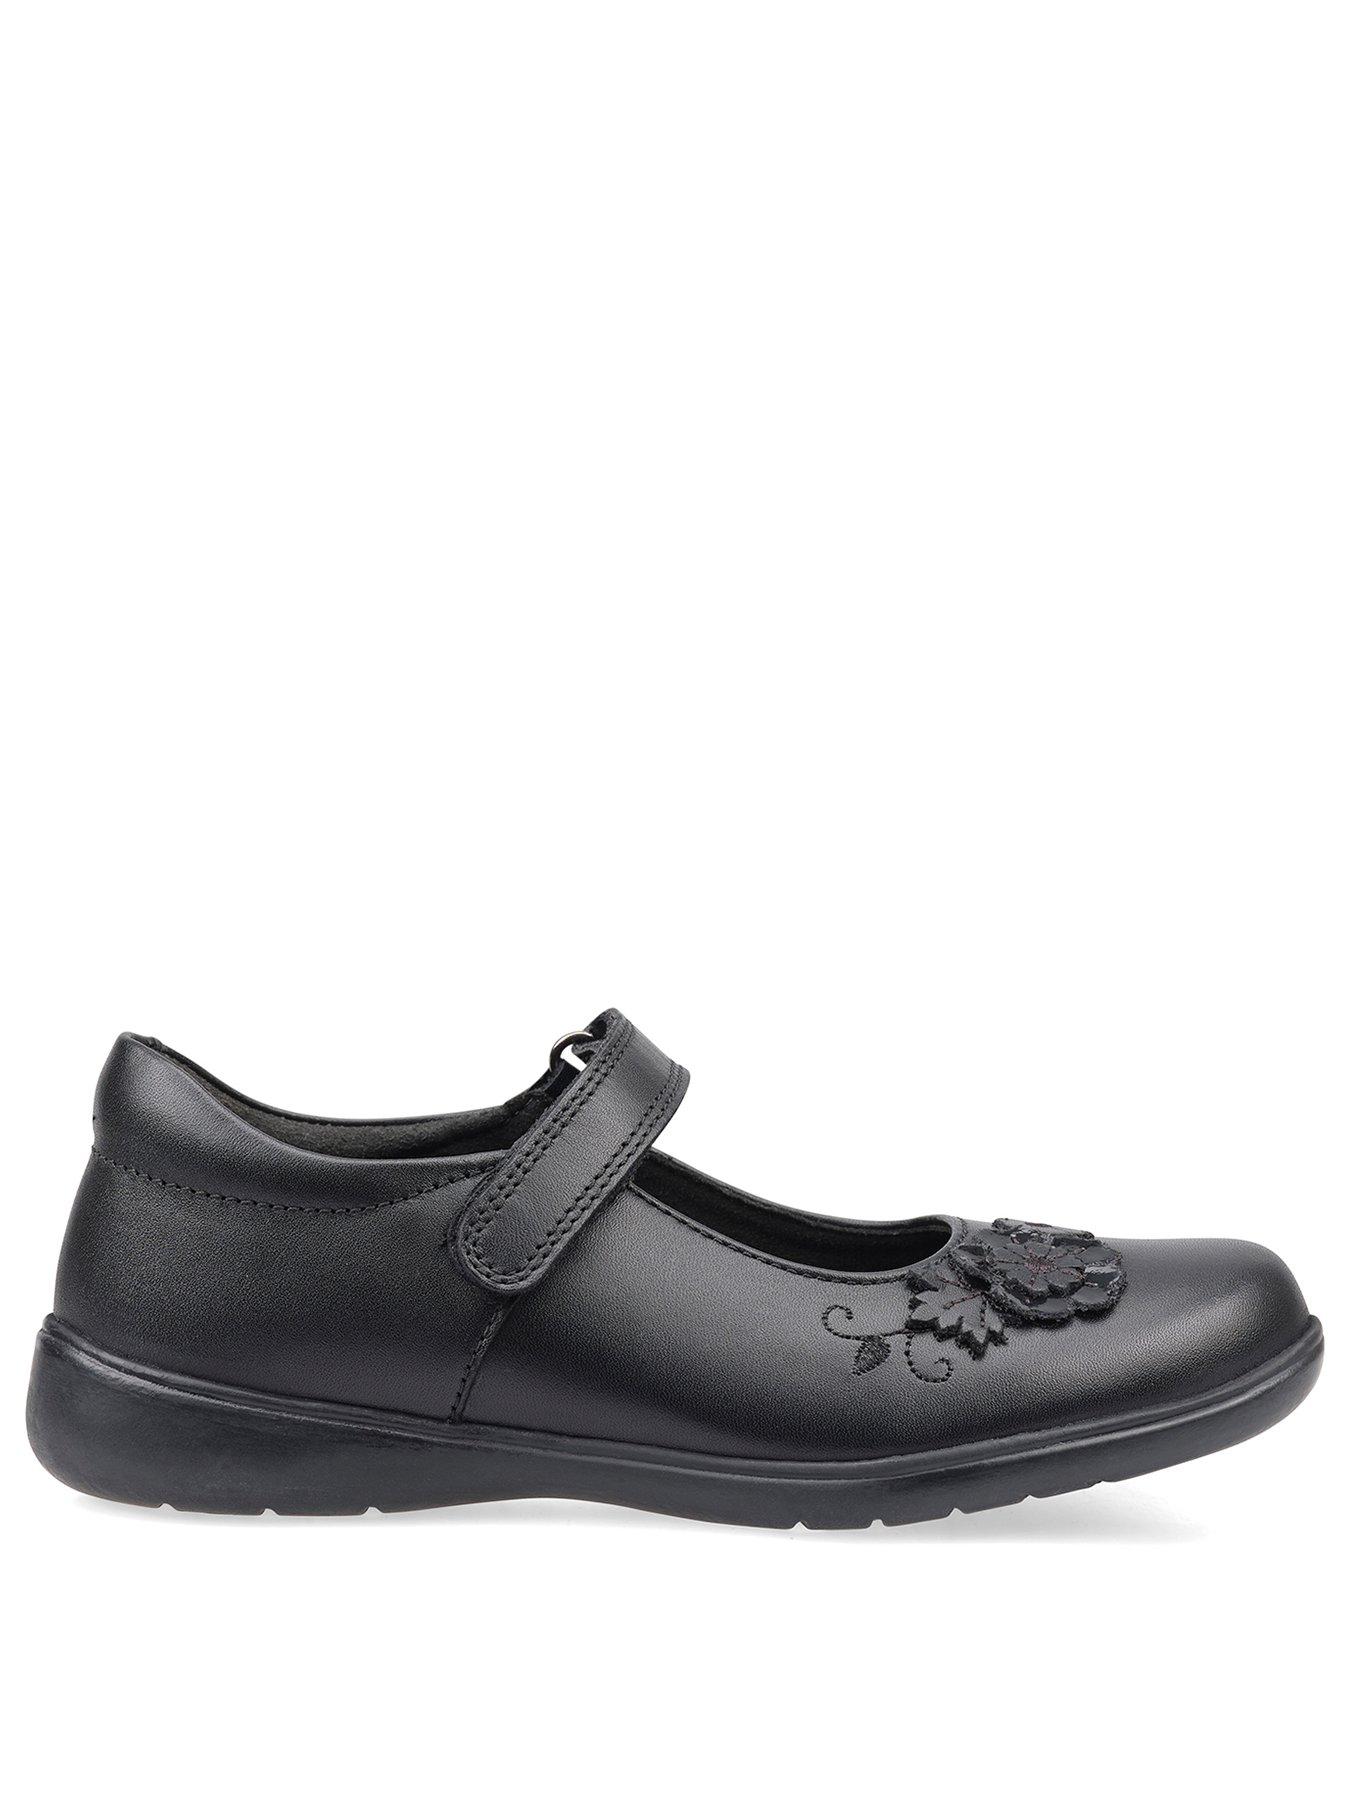 School & uniform Wish School Shoe - Black Leather